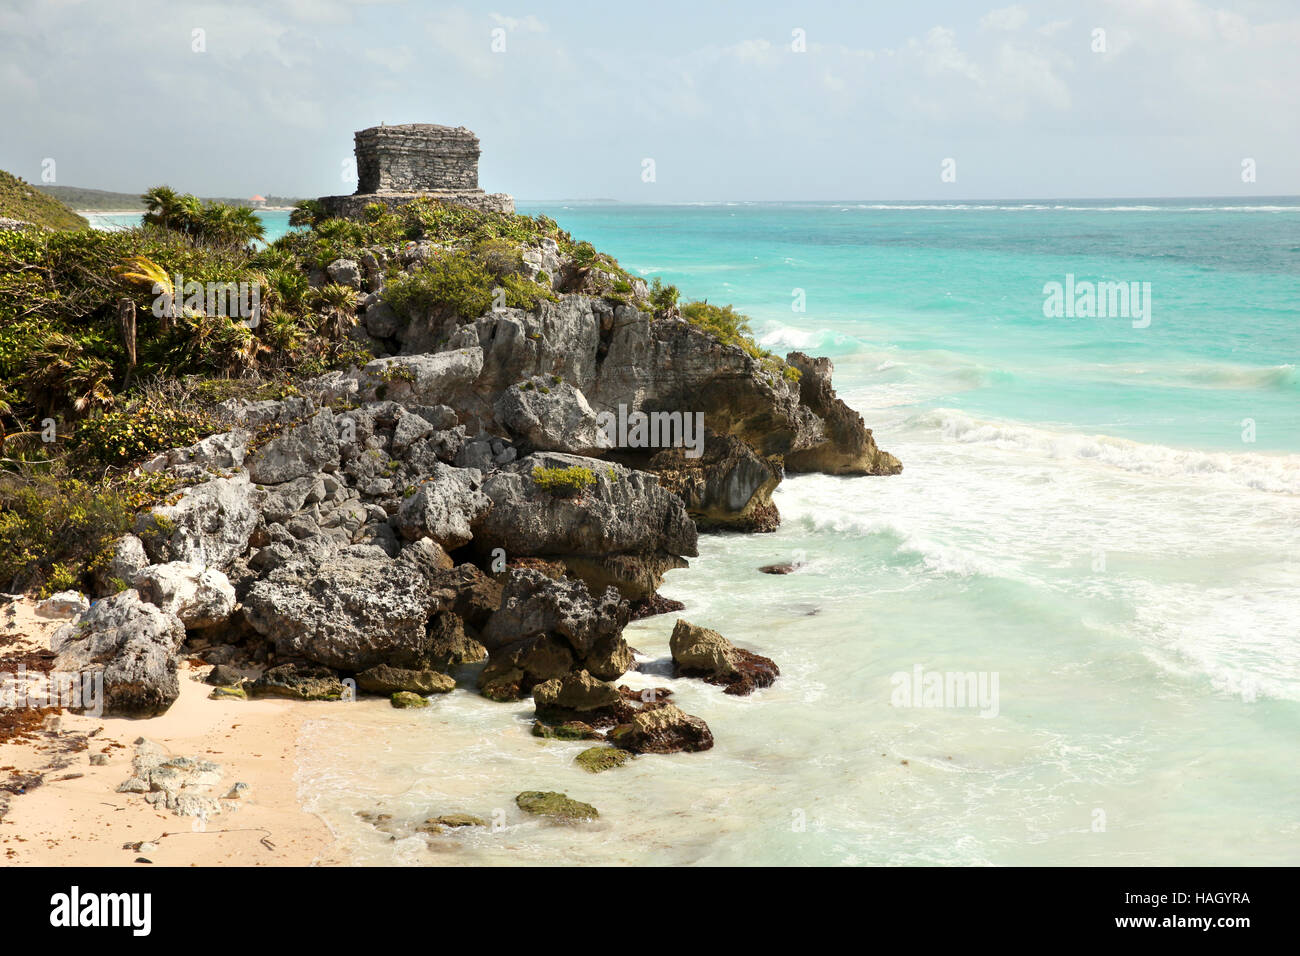 Ruinen von Tulum entlang der wunderschönen karibischen Küste, Maya ummauerten Stadt. Playa del Carmen, Halbinsel Yucatán, Mexiko. Stockfoto